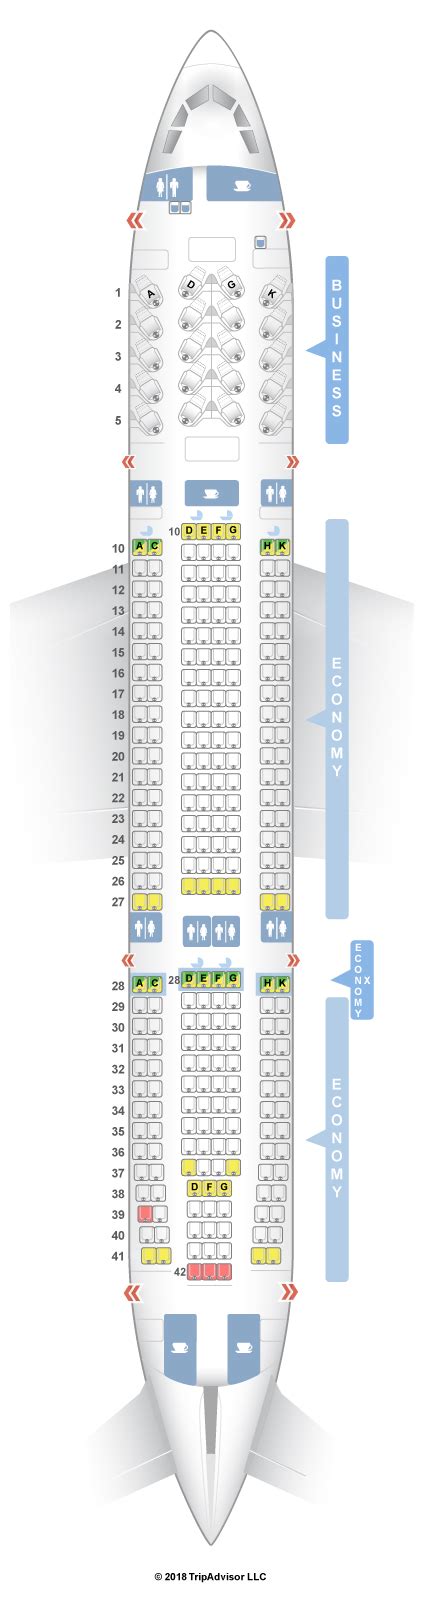 Seatguru Seat Map Virgin Australia Airbus A330 200 332